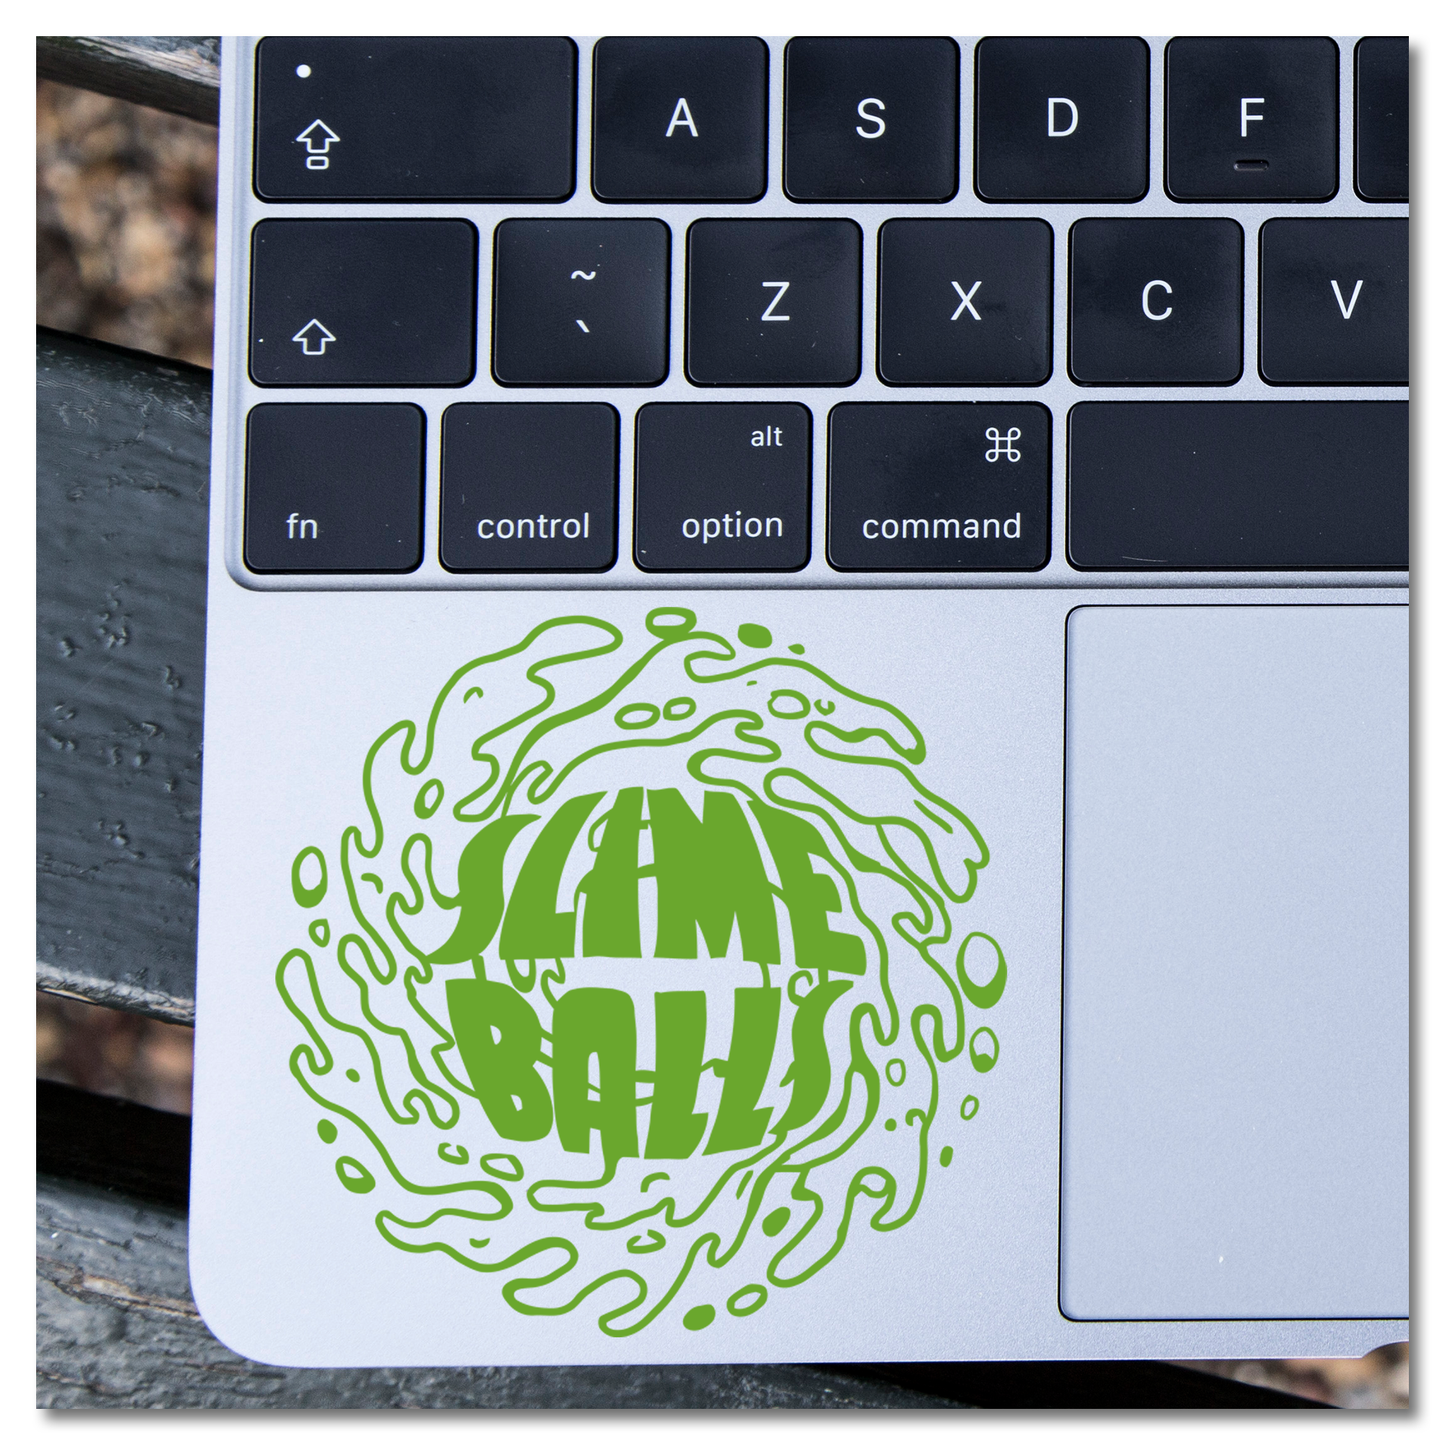 Slime Balls Wheels Vinyl Decal Sticker